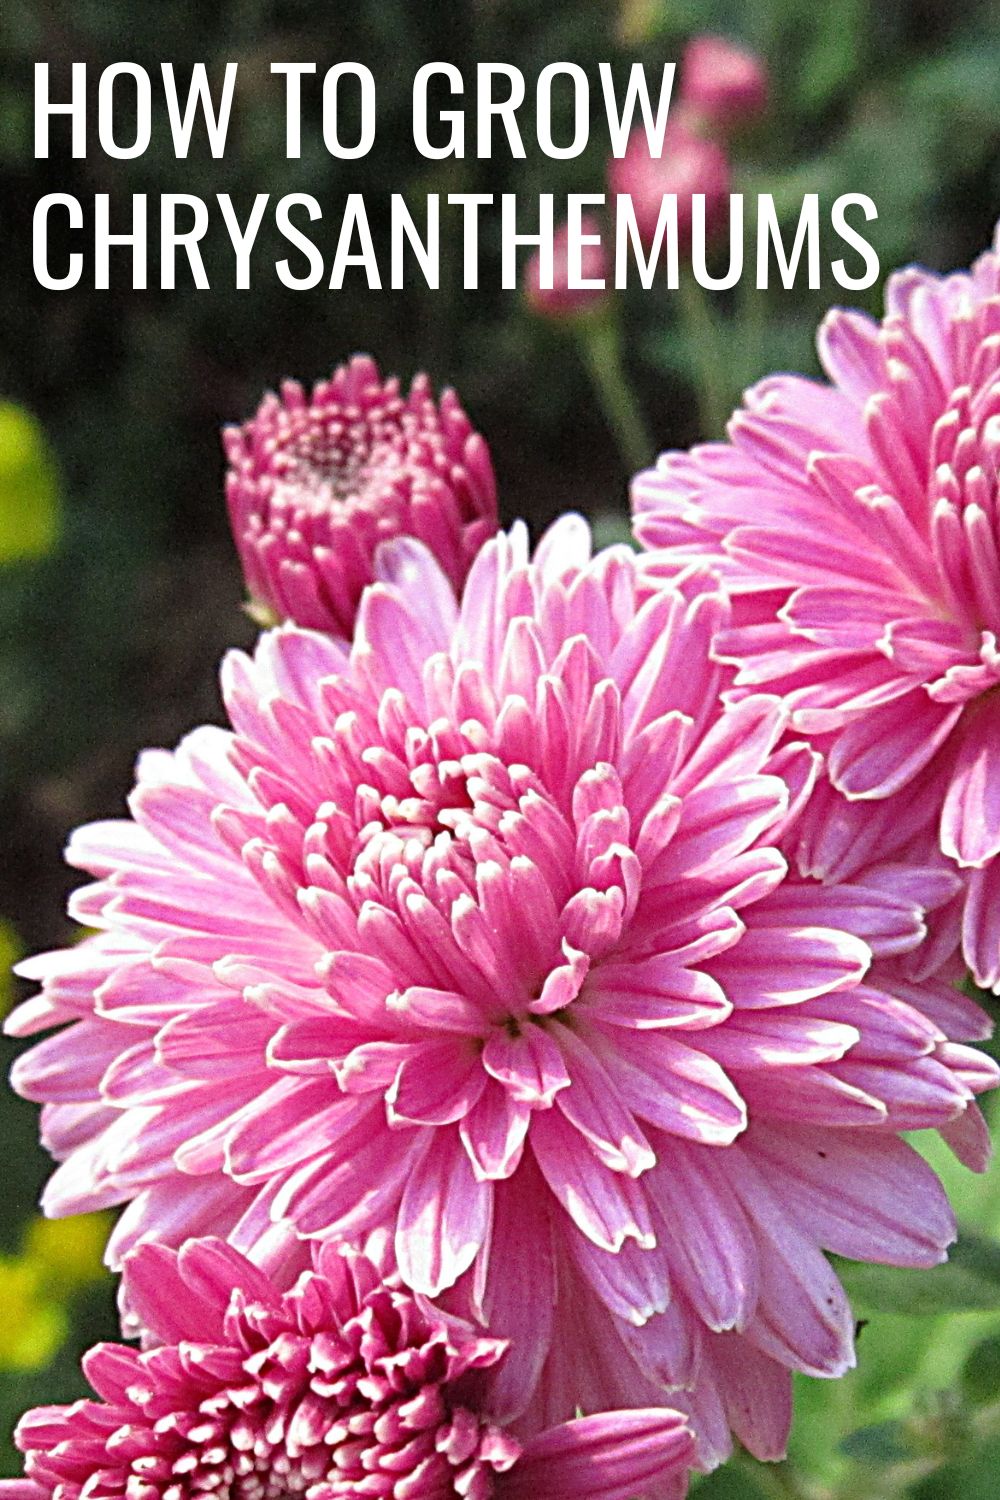 How to grow chrysanthemums.